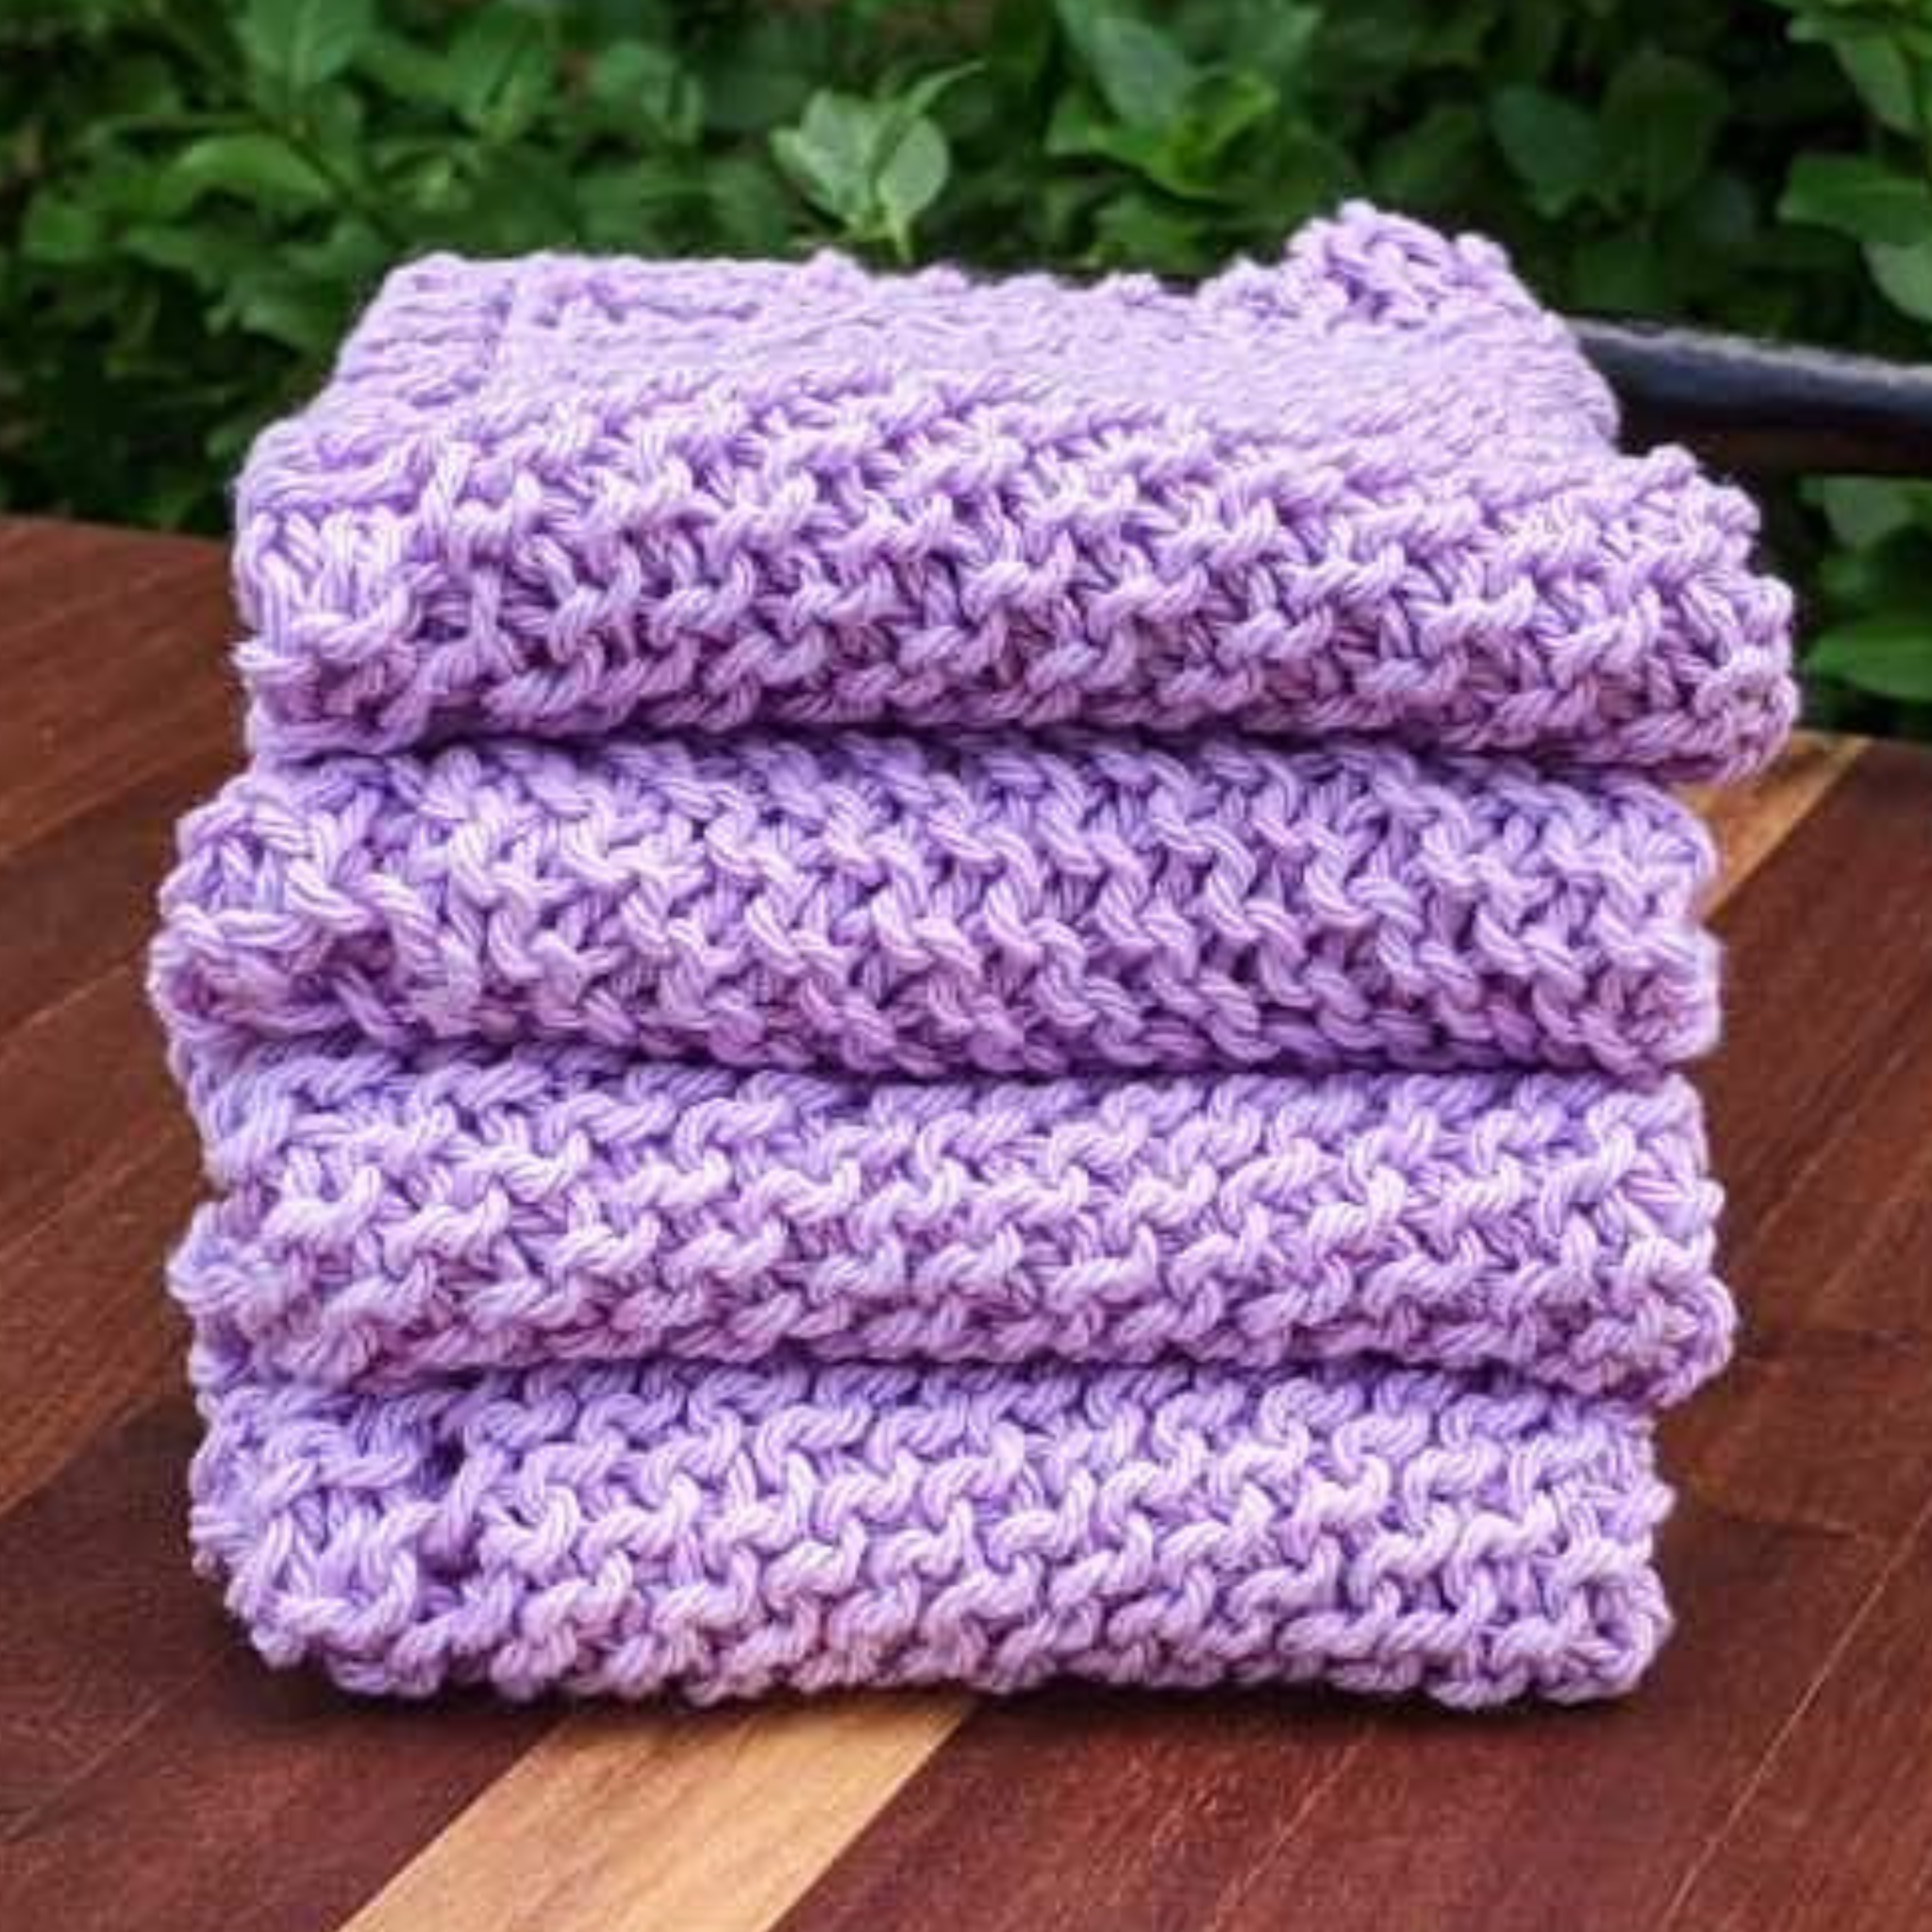 Set of Four Hand-Knit Washcloths, 100% Cotton Dishrags, Lilac Purple